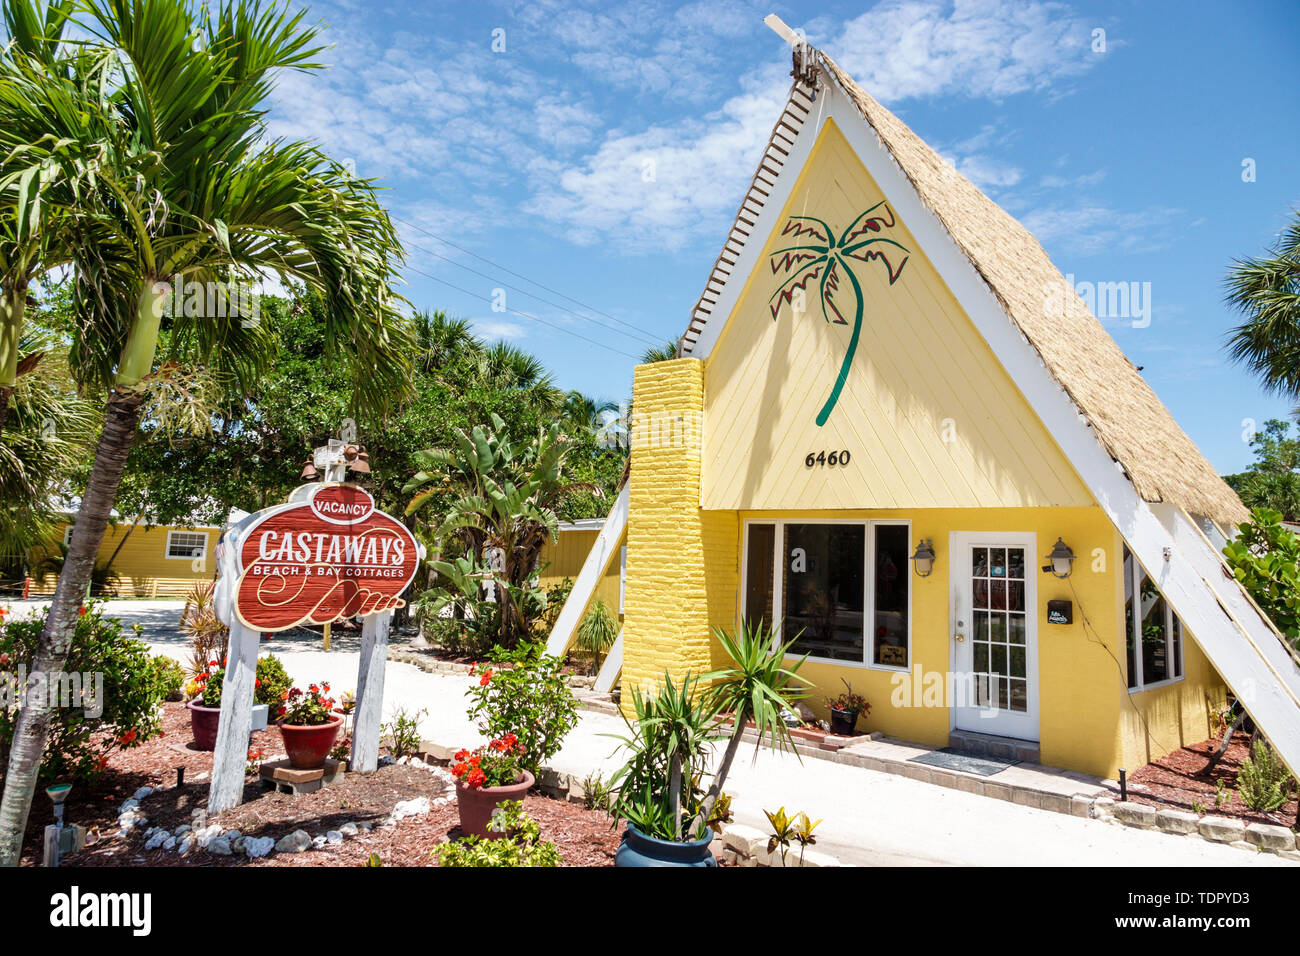 Sanibel Island Florida,Castaways Beach & Bay Cottages,resort,hotel,garden,registration office,Chikee Chickee hut inspired design,thatched roof,vacancy Stock Photo